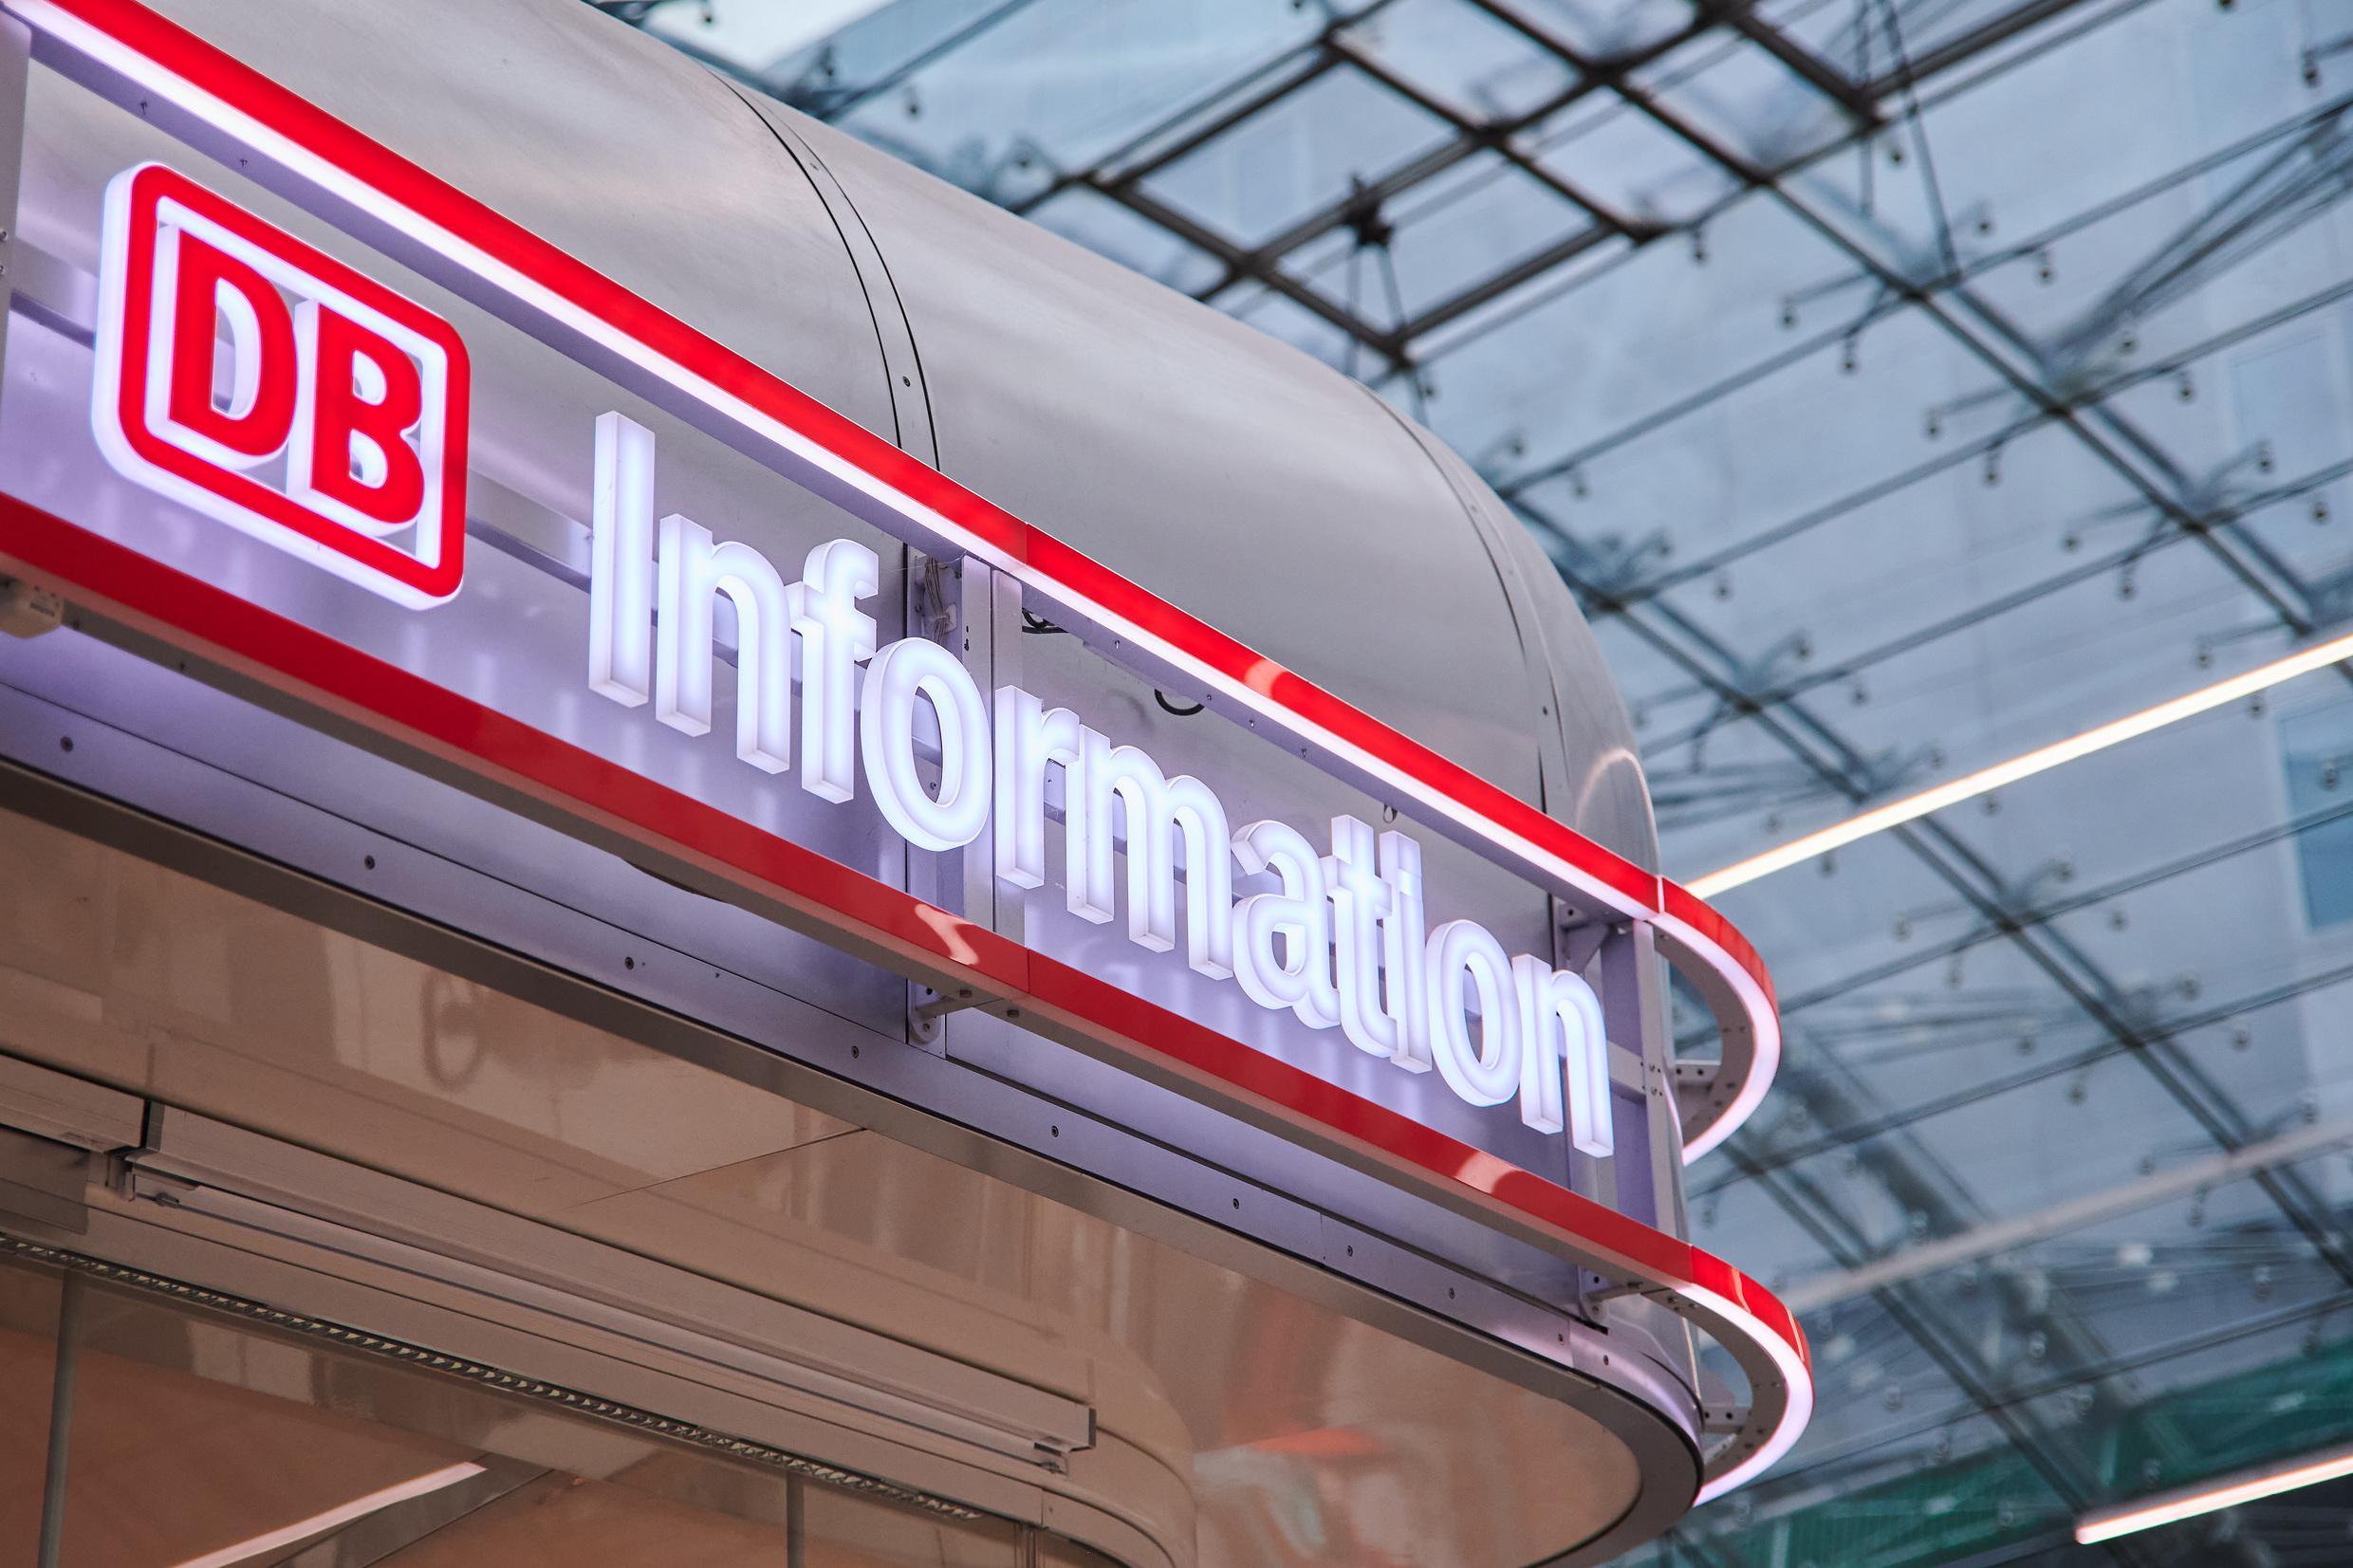 The new DB Information at Frankfurt Flughafen Regionalbahnhof.